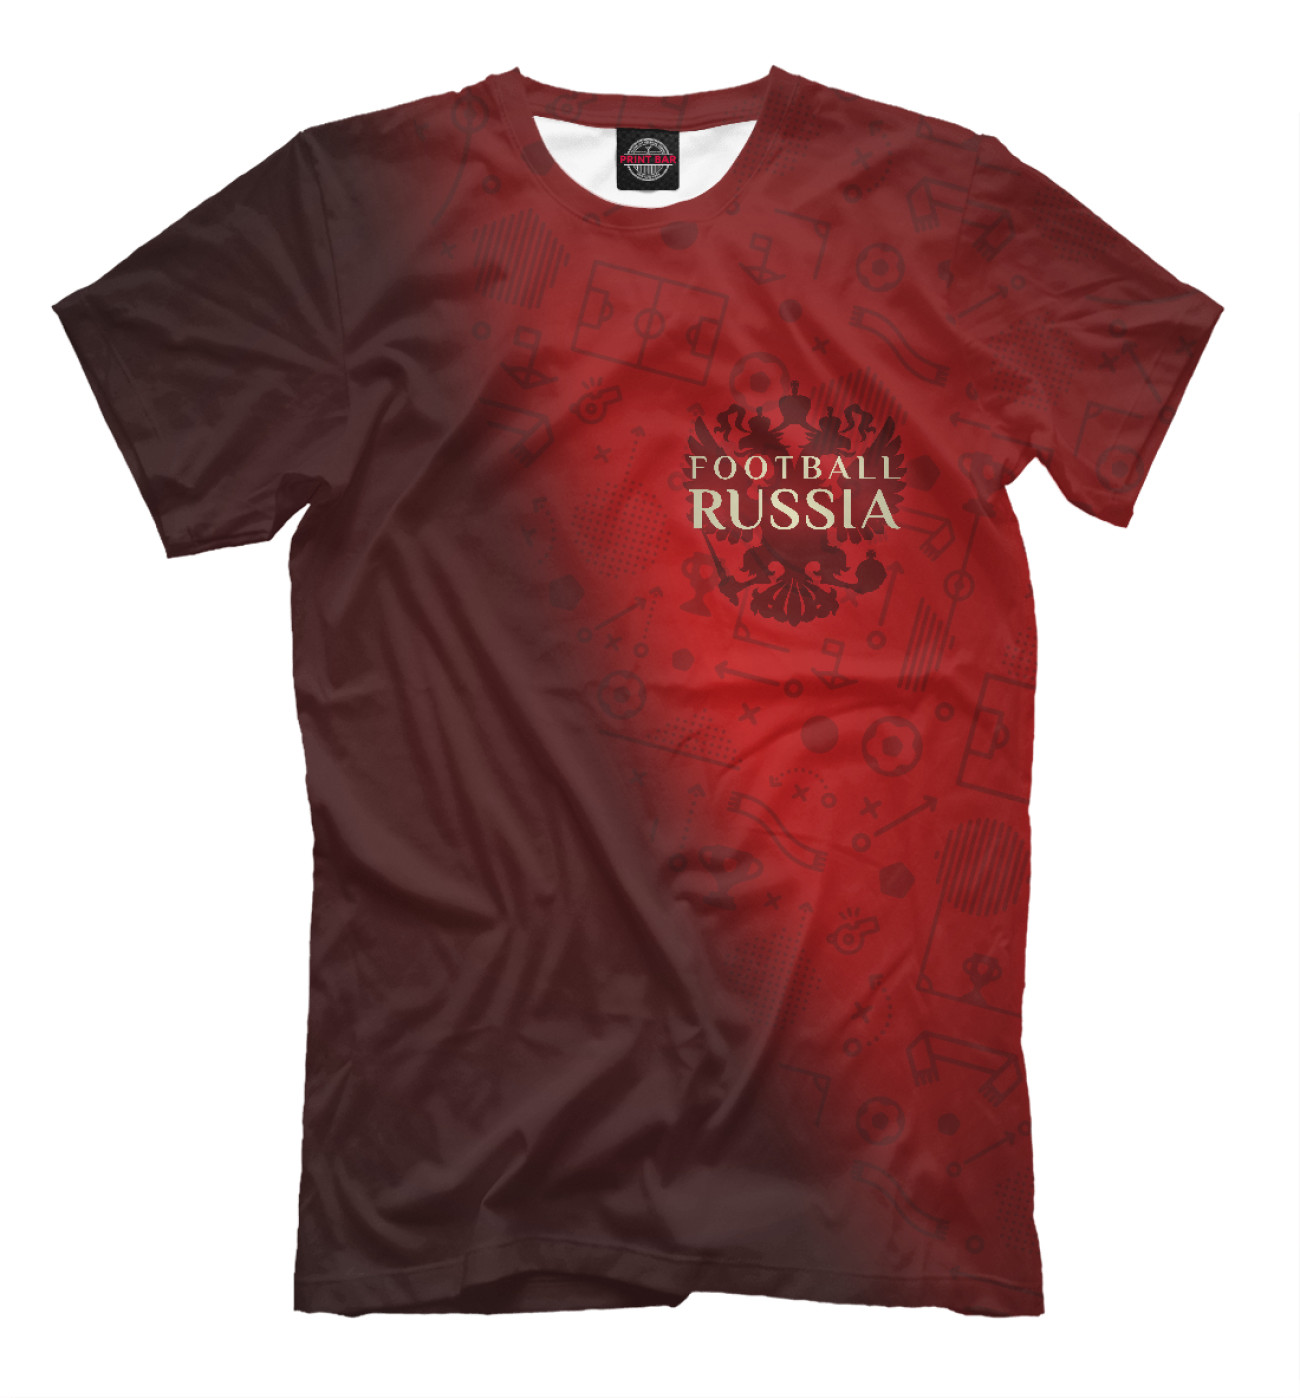 Мужская Футболка Football Russia, артикул: FTO-708438-fut-2